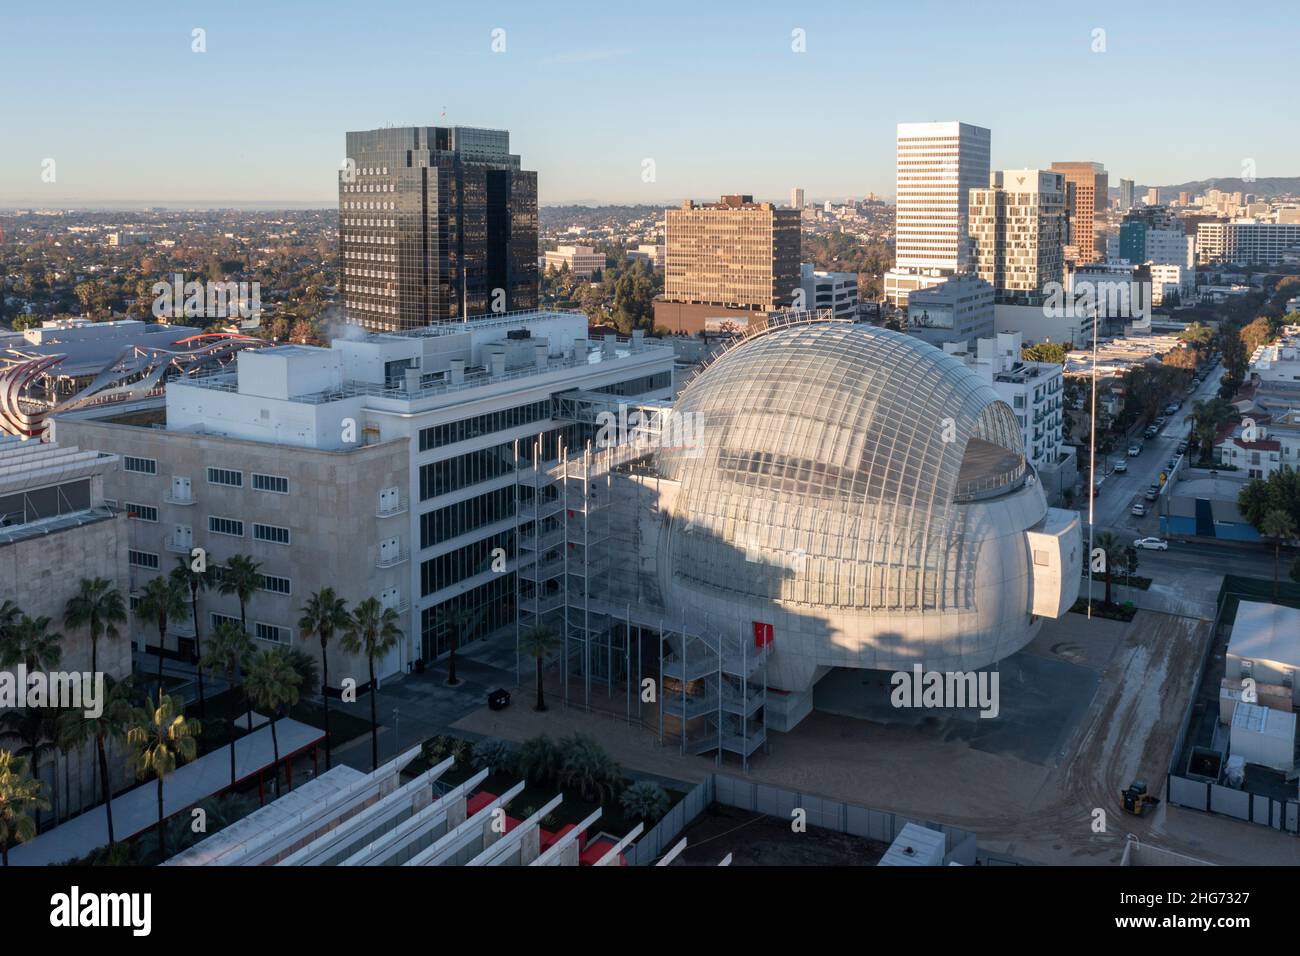 Vista aérea del Academy Museum of Motion Pictures en Los Ángeles Foto de stock